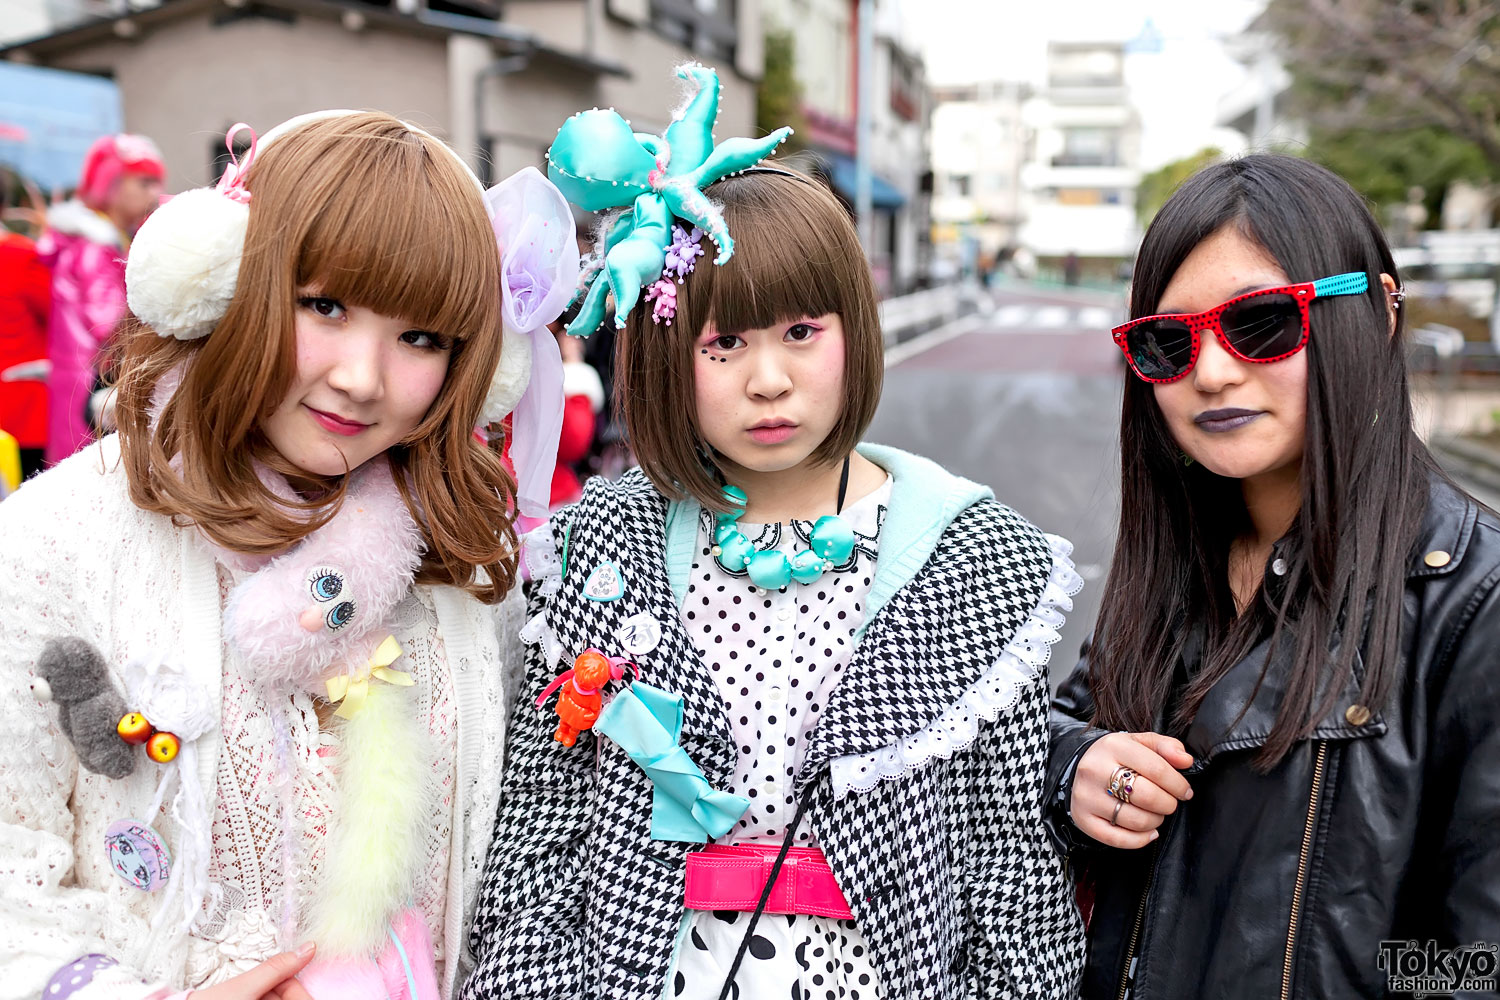 Harajuku Fashion Walk #8 Pictures, Video & Street Snaps